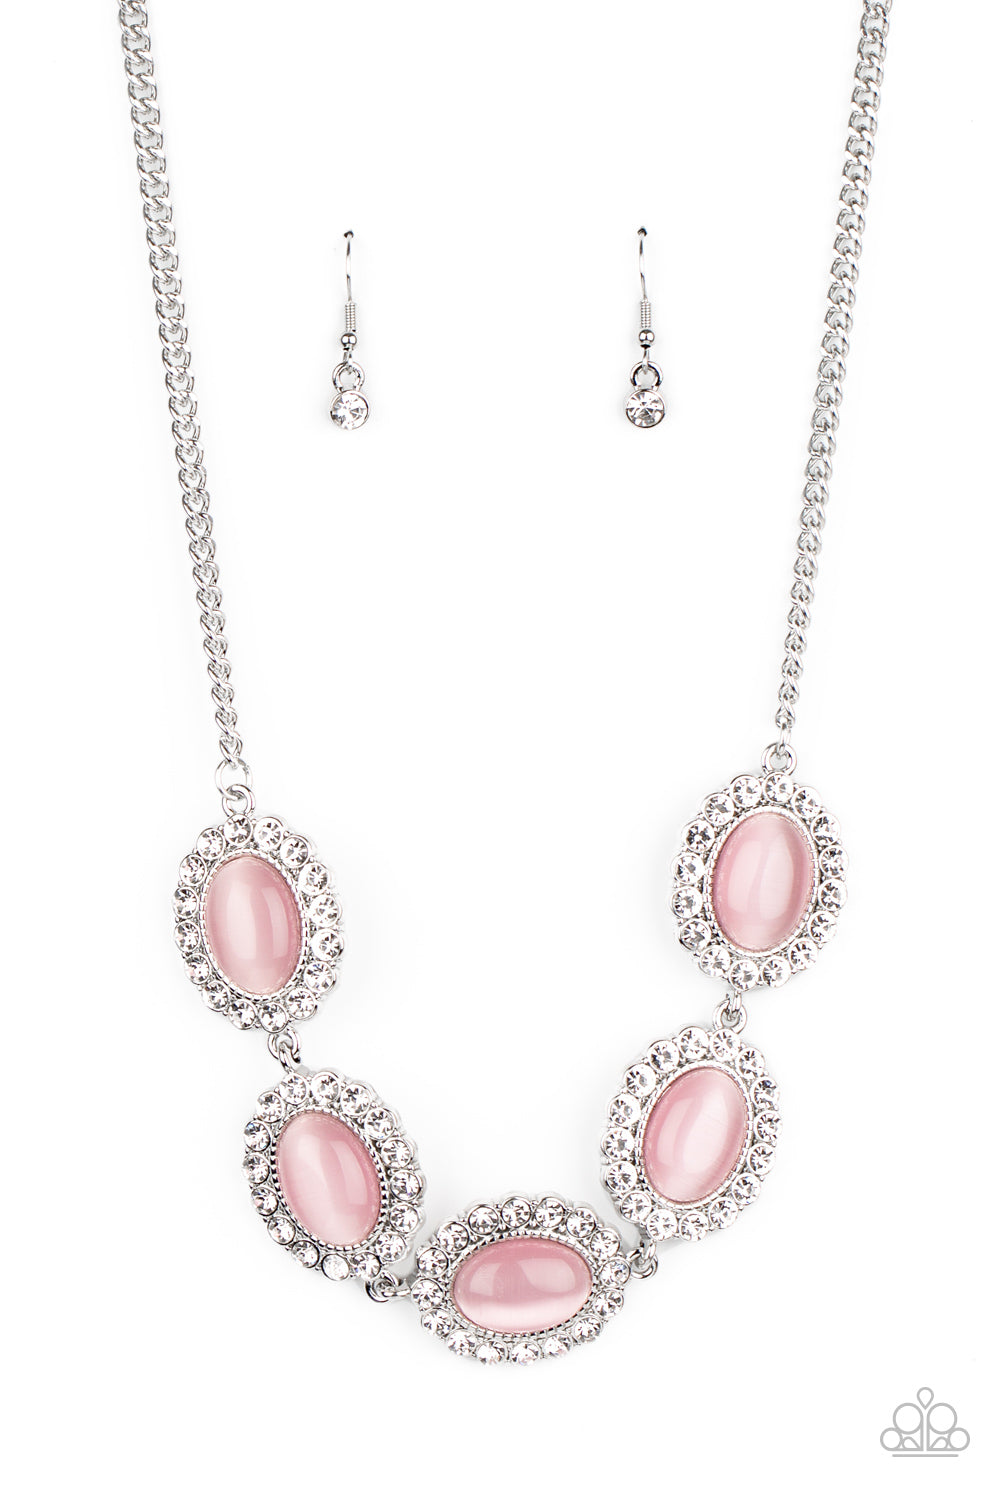 five-dollar-jewelry-a-diva-ttitude-adjustment-pink-paparazzi-accessories